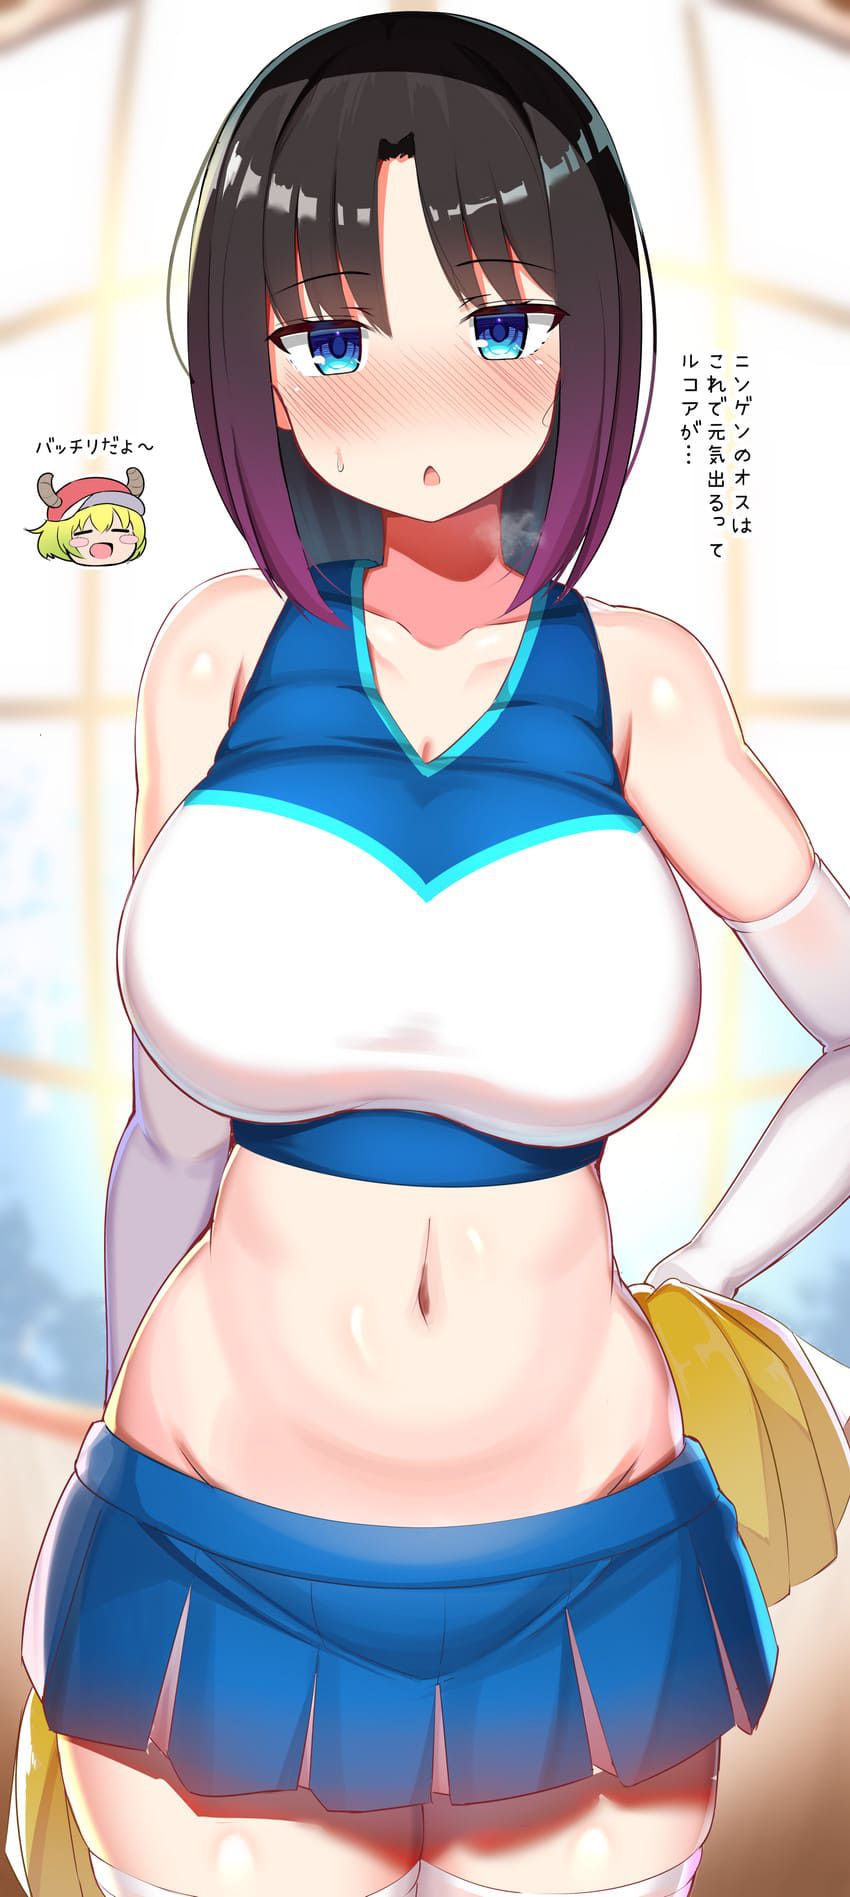 Kobayashi-san's Maid Dragon Moe Erotic Image Summary 44